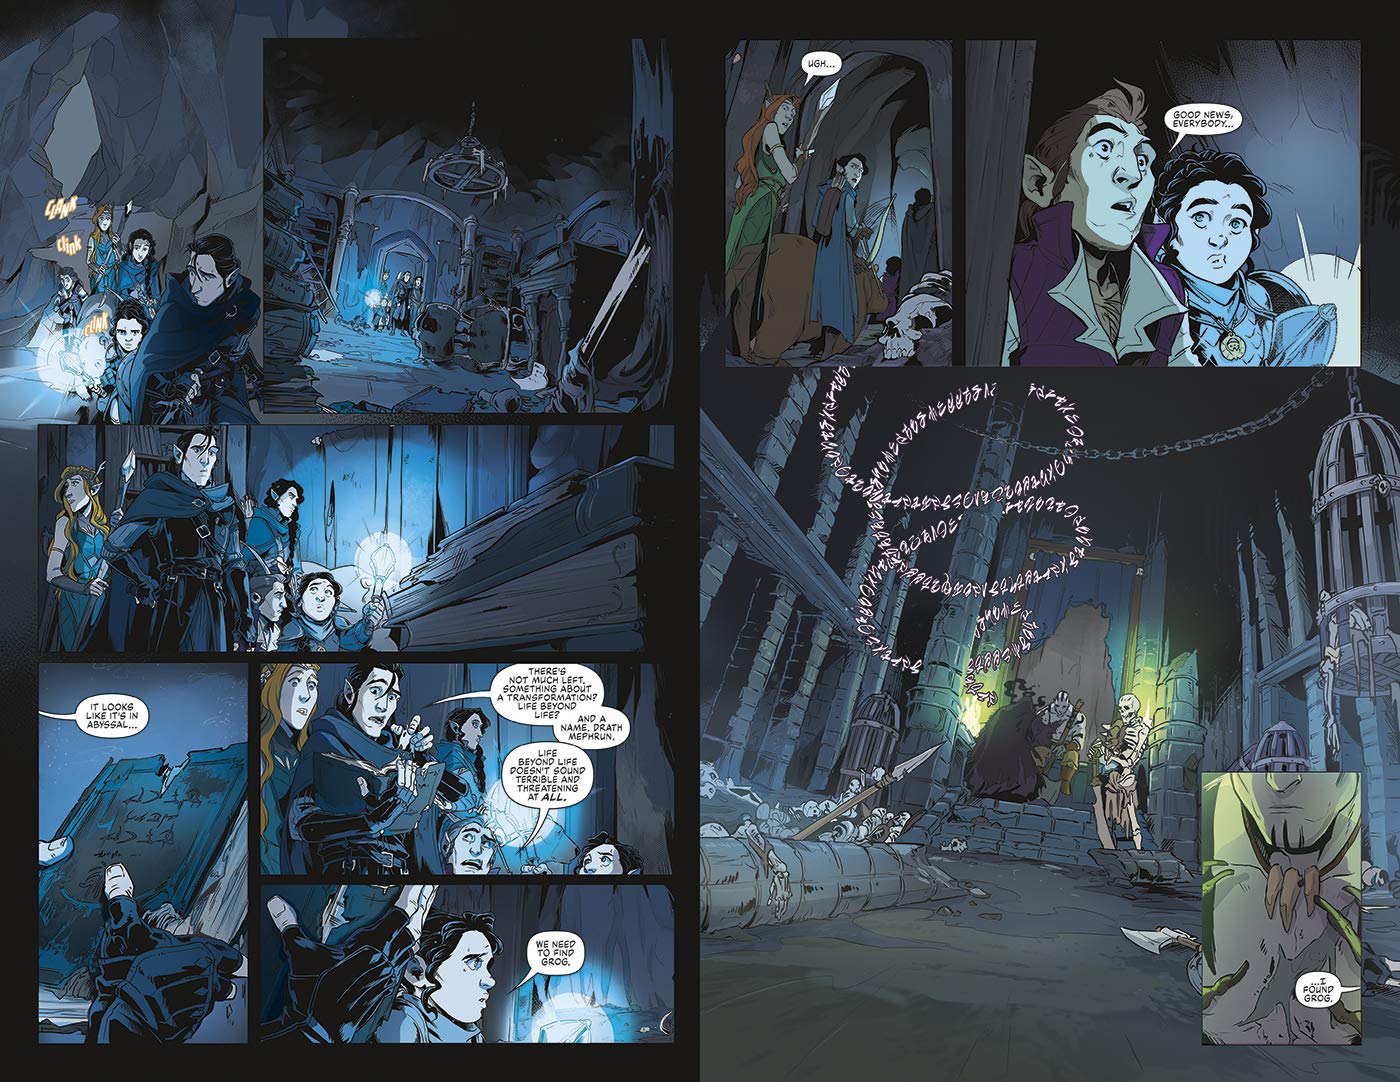 Critical Role: Vox Machina Origins Volume II - Graphic Novel - The Hooded Goblin